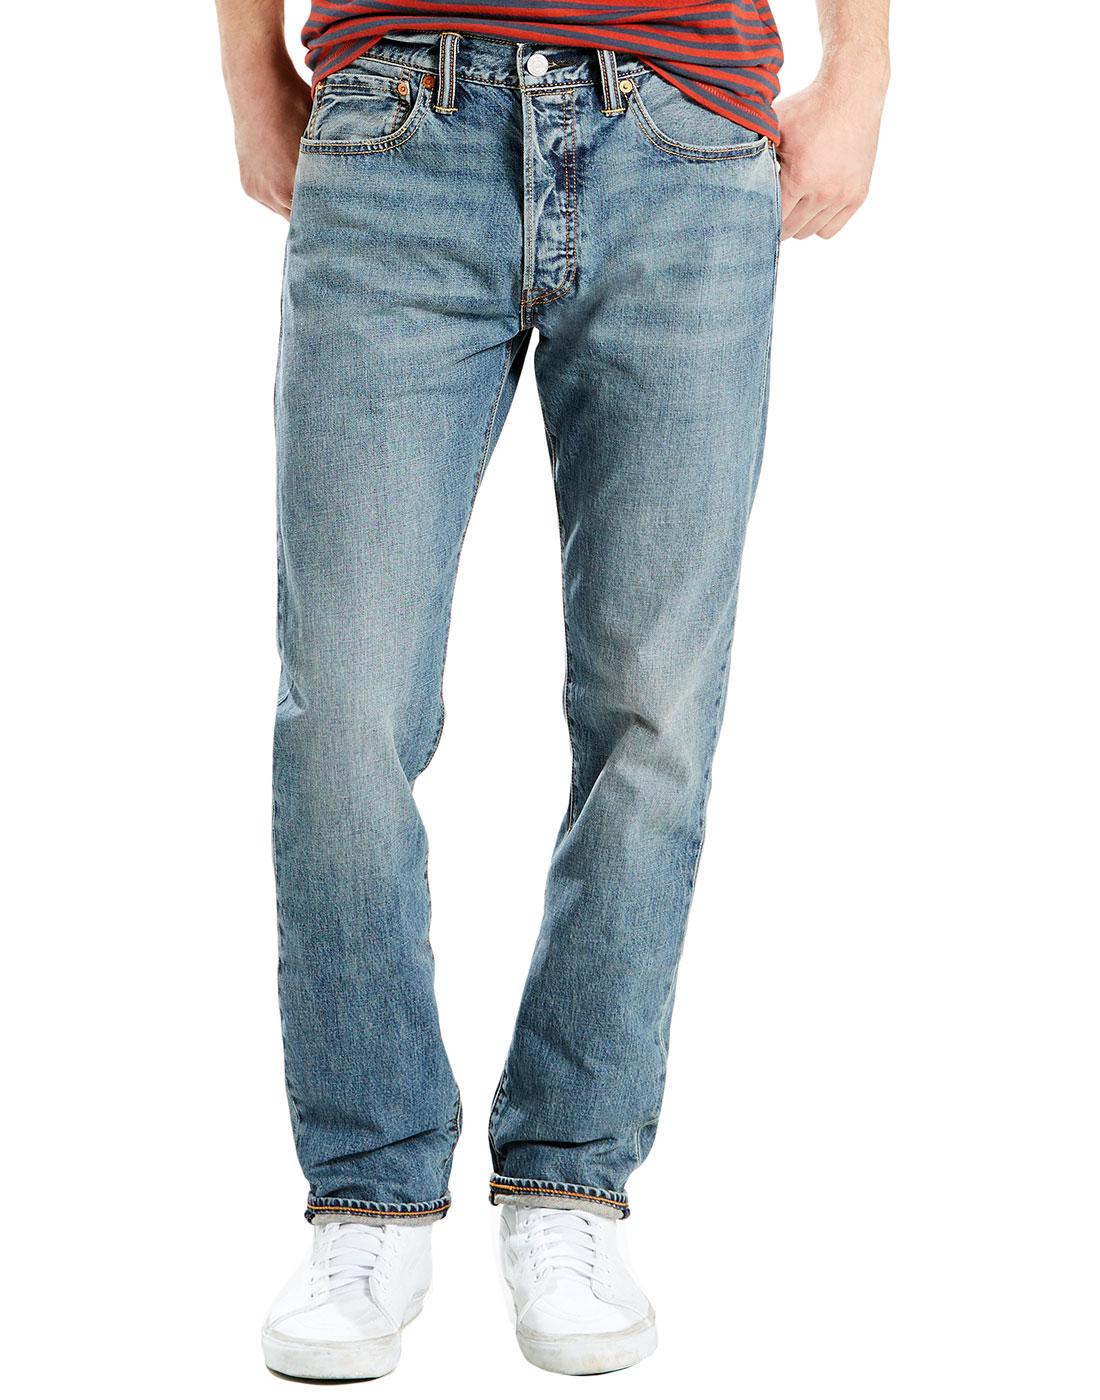 LEVI'S® 501 Retro Mod Original Fit Straight Jeans Pink Sand Cool